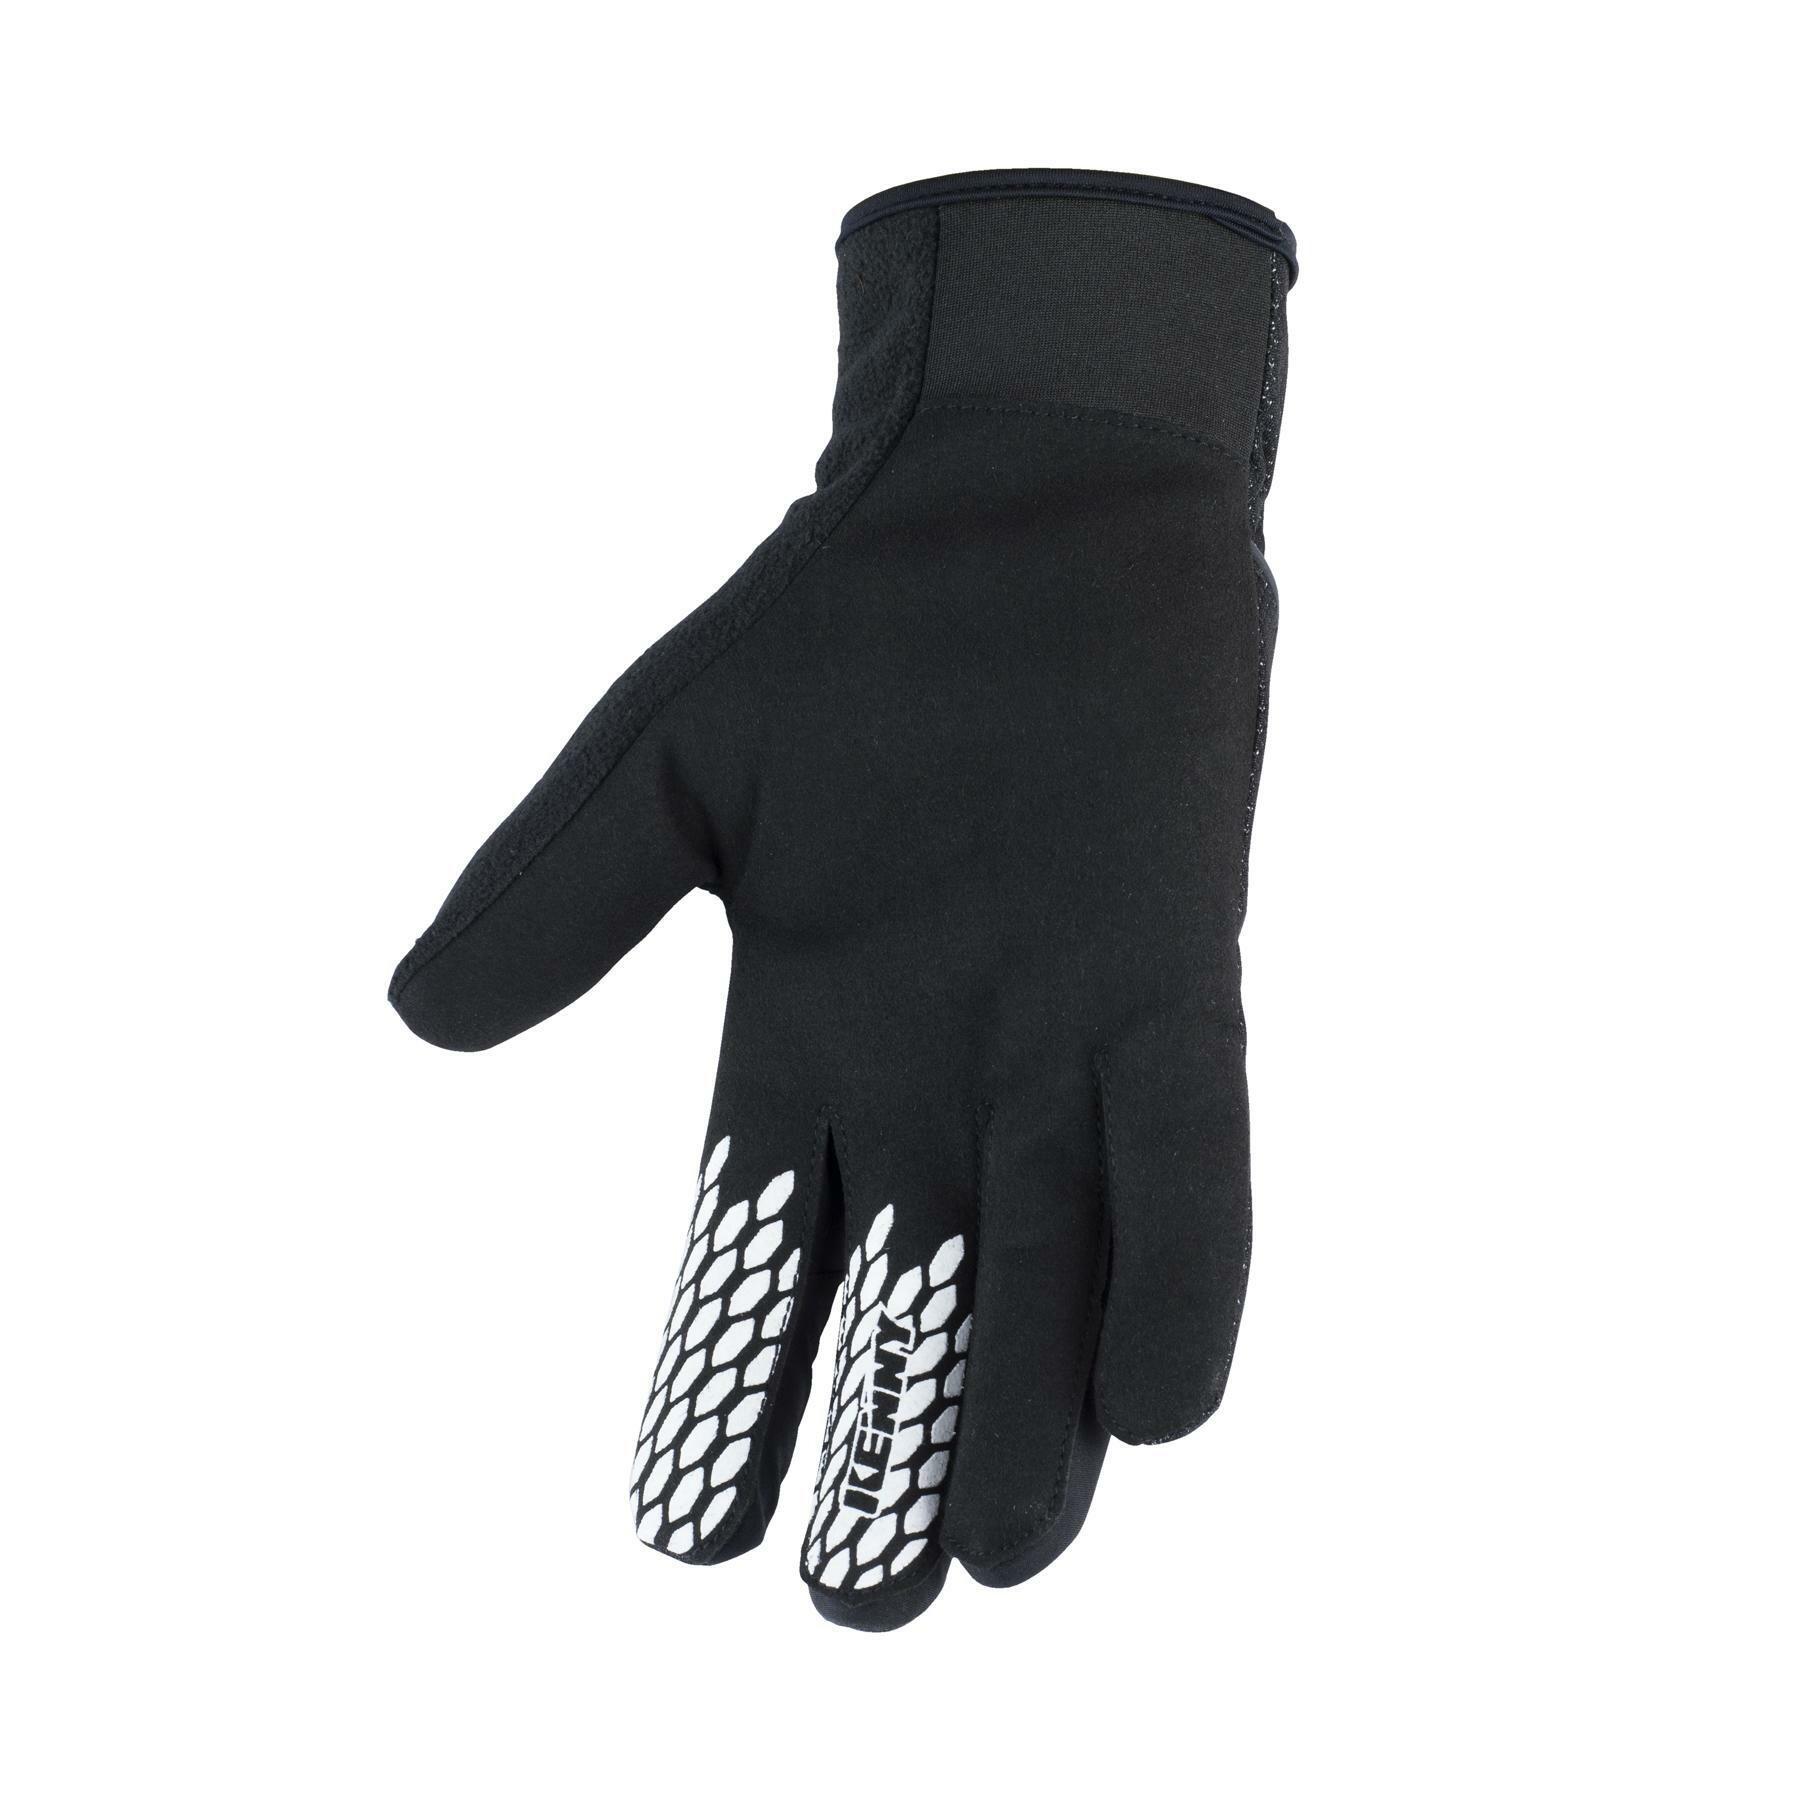 Gloves Kenny Warm